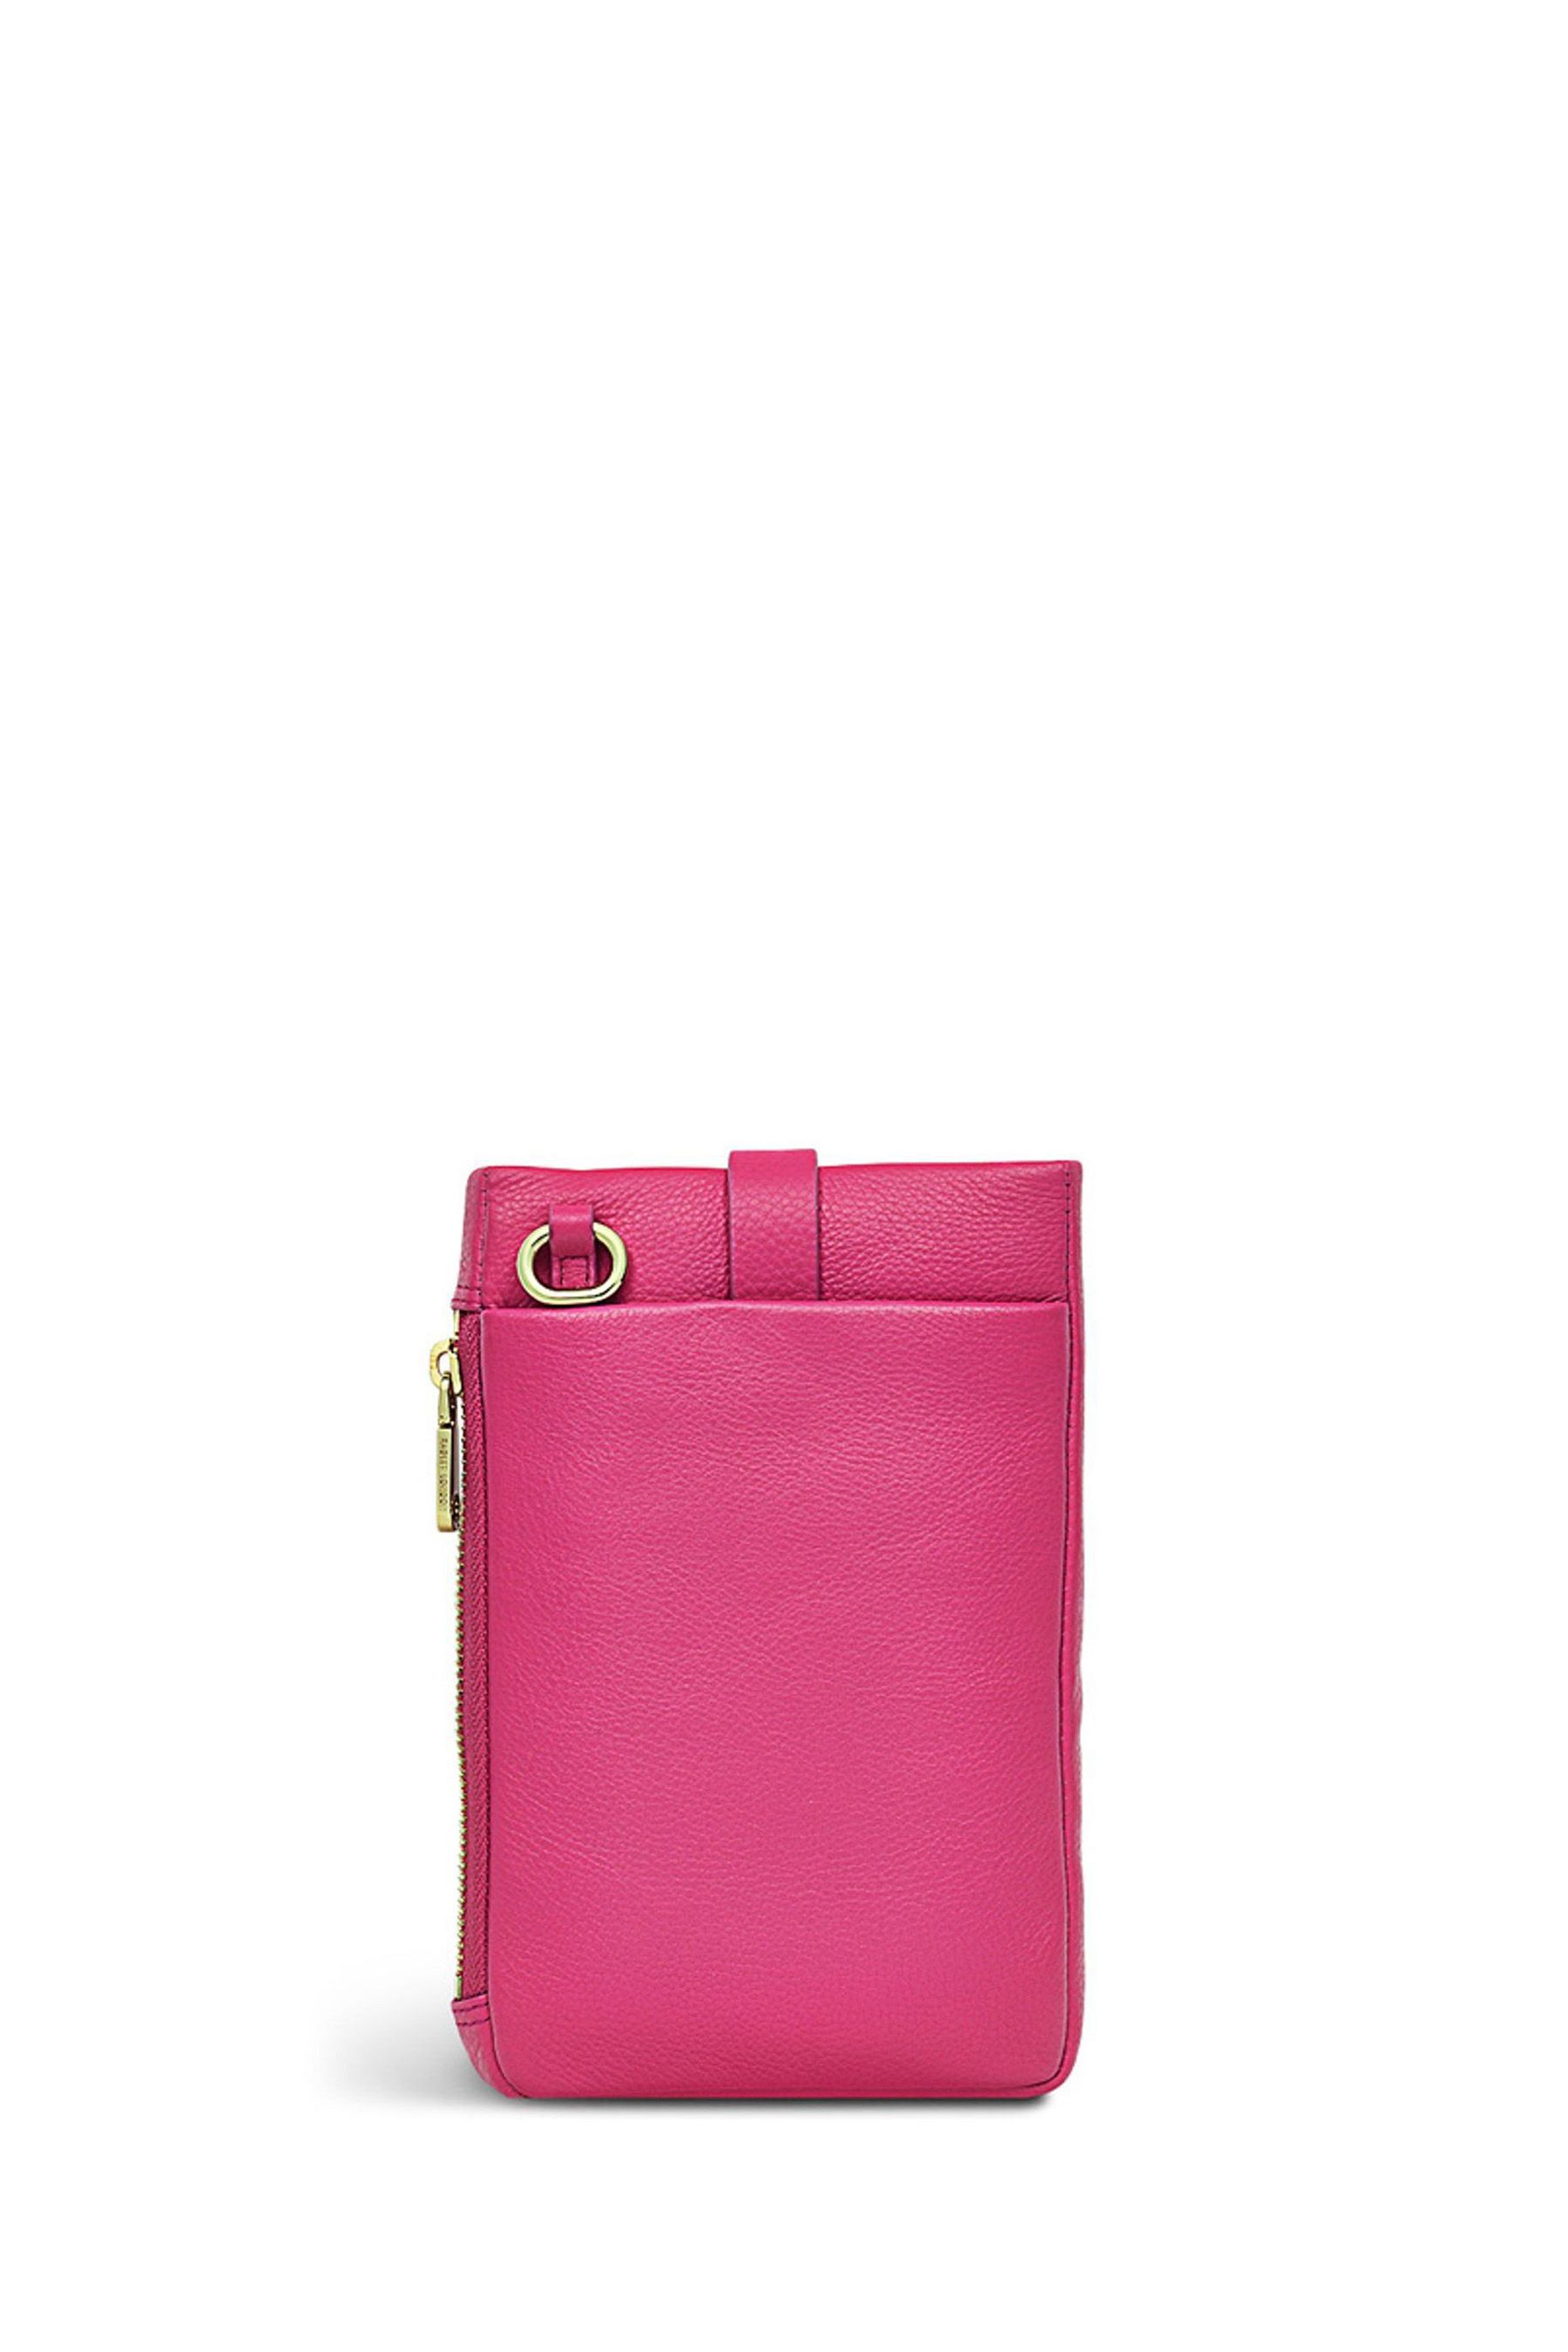 Buy Radley London Large Pink Mallow Street Phone Cross-Body Bag from ...